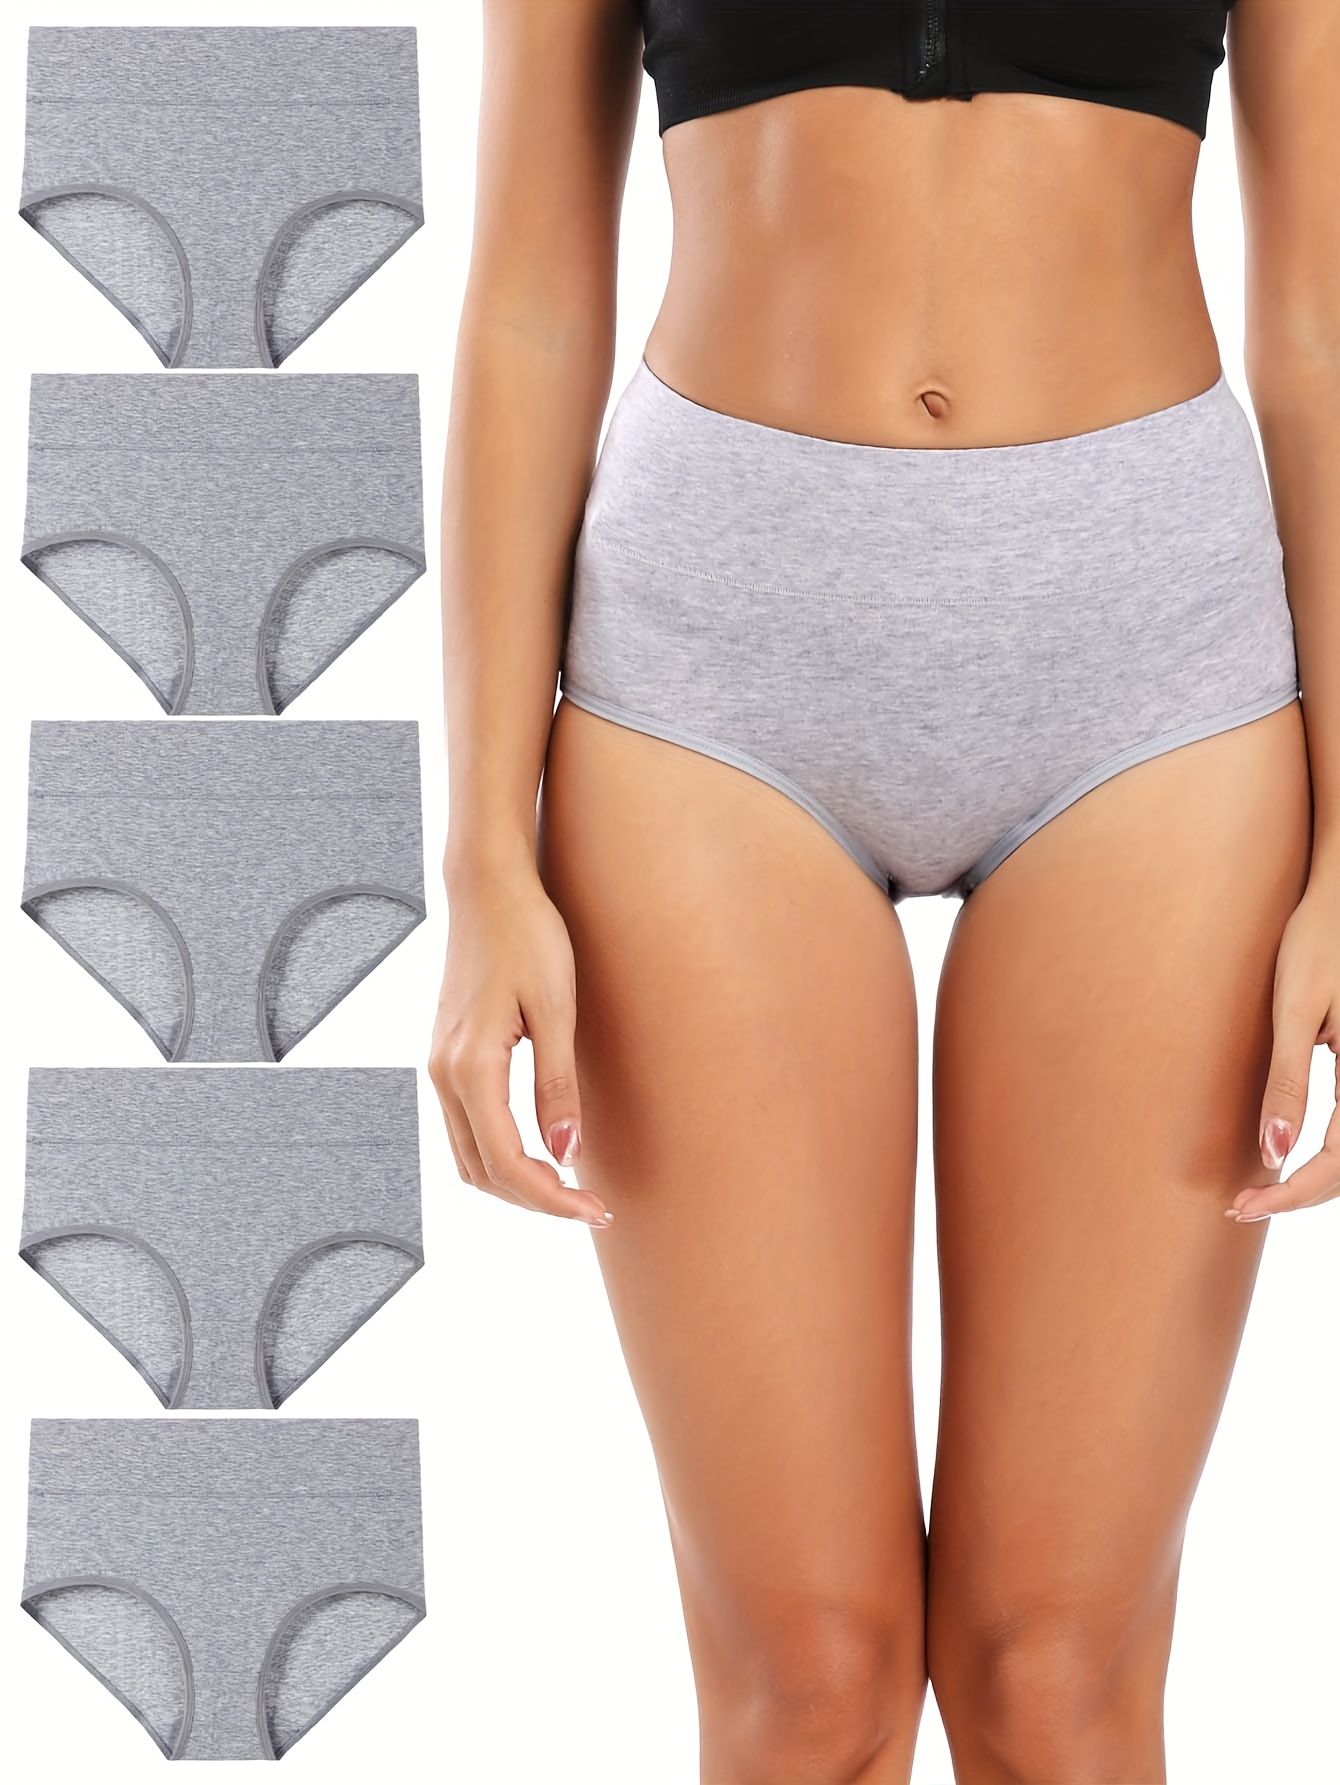 Molasus 5pcs Women's Breathable Cotton Panties High Cut Belly